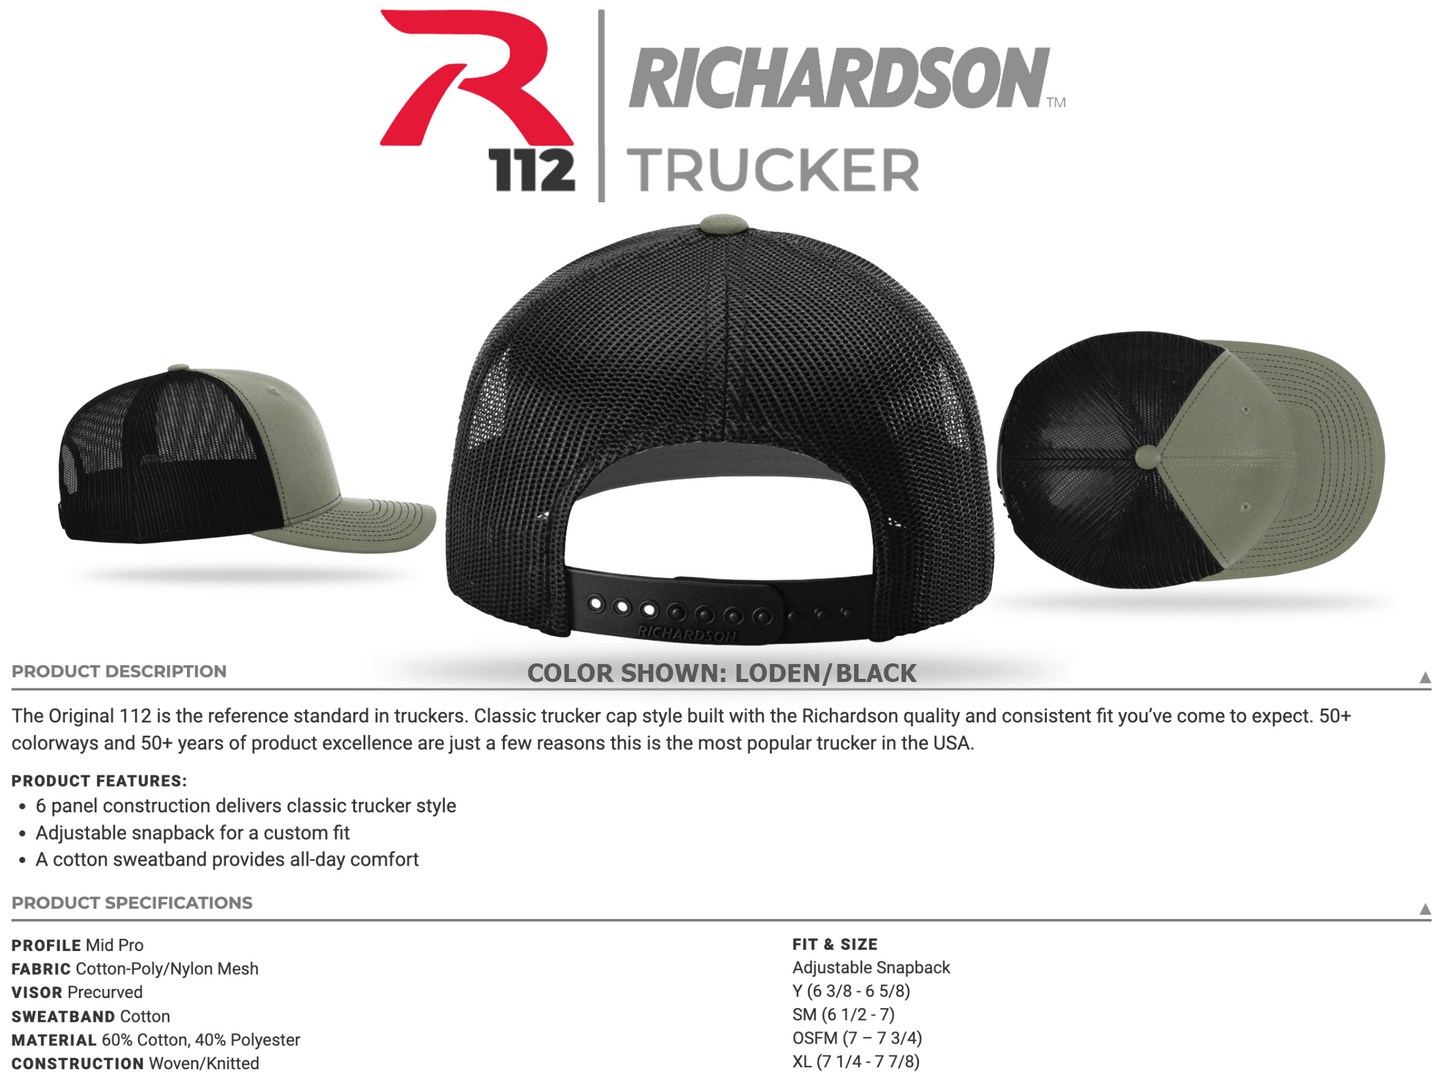 Faith Is Essential Richardson 112 Trucker Mesh Back Hat